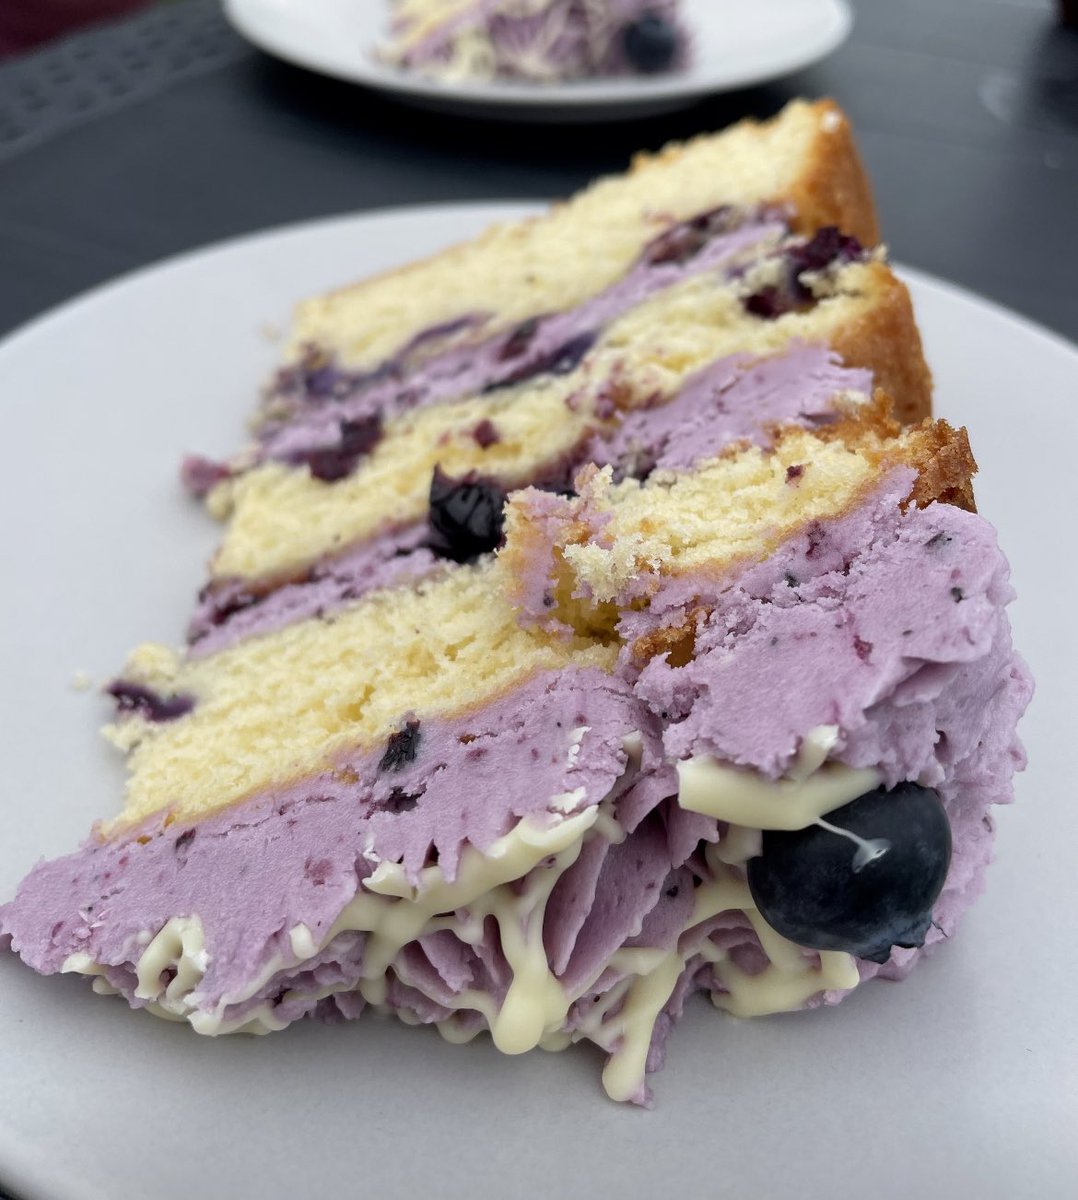 @DailyPicTheme2 The most amazing #mauve cake - blueberry & white chocolate from Blueberrys Cafe, Shanklin #IsleofWight